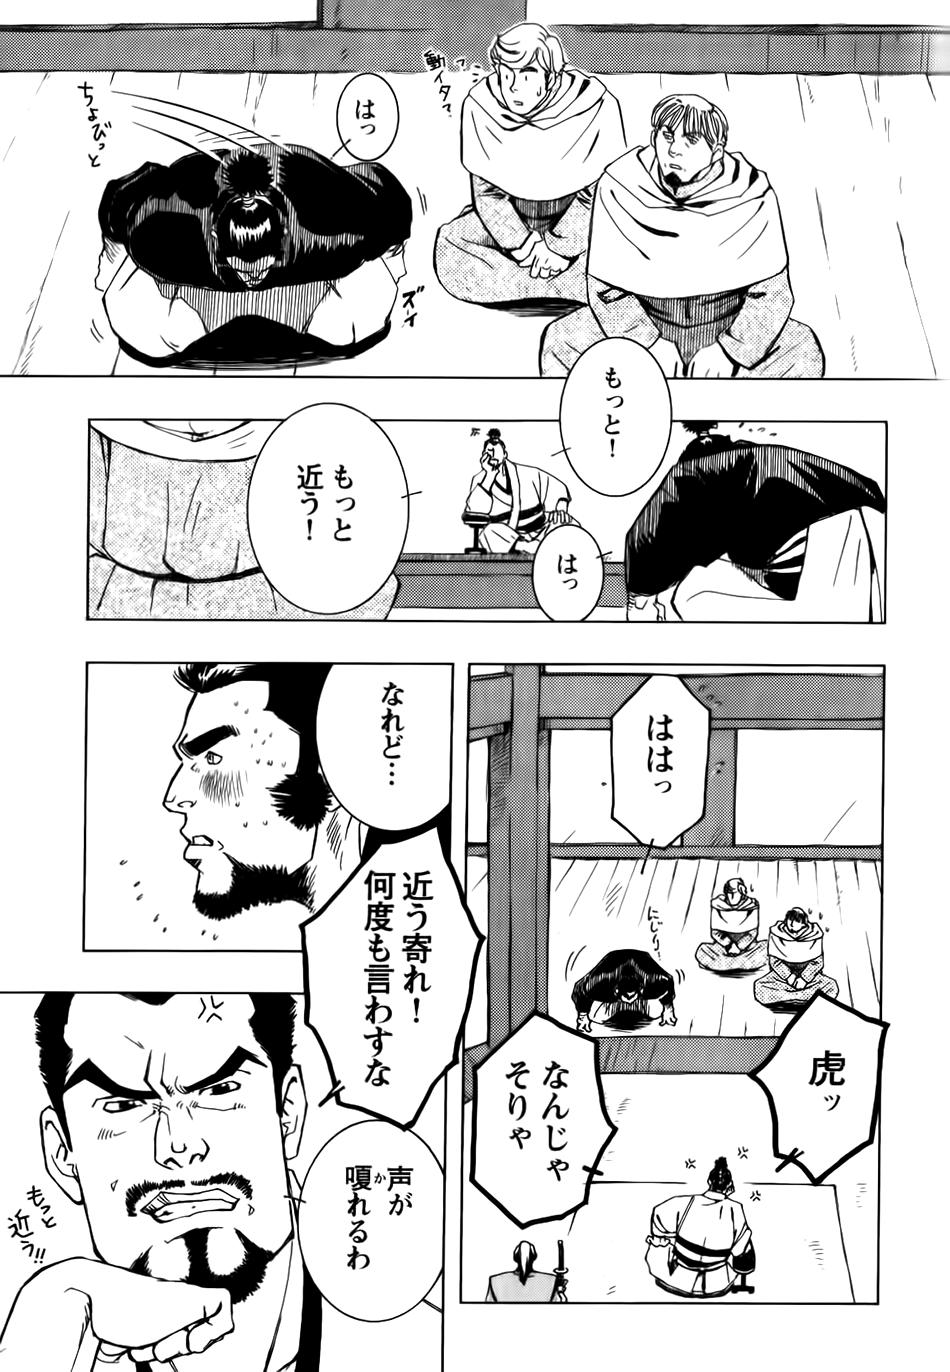 Butt Fuck Nobunaga's lotion man Jerking Off - Page 3